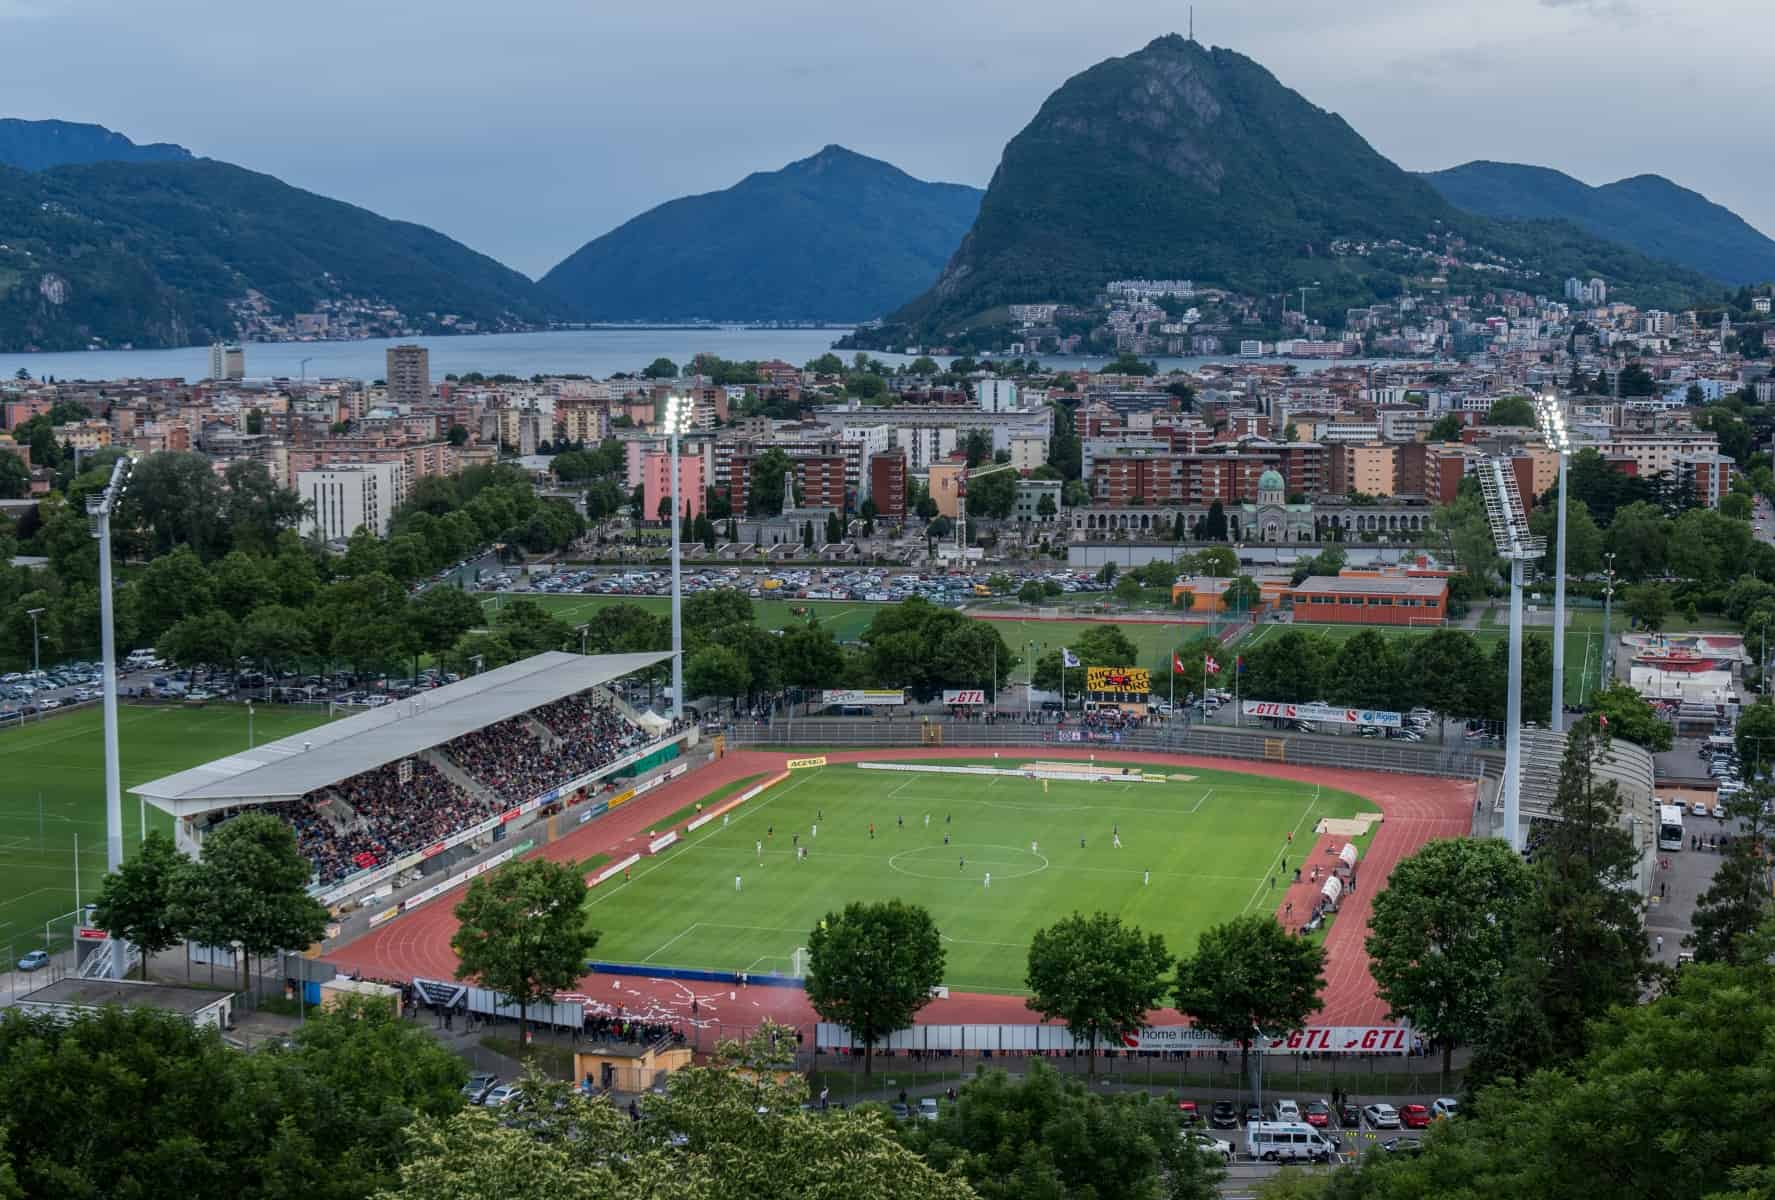 Home - FC Lugano